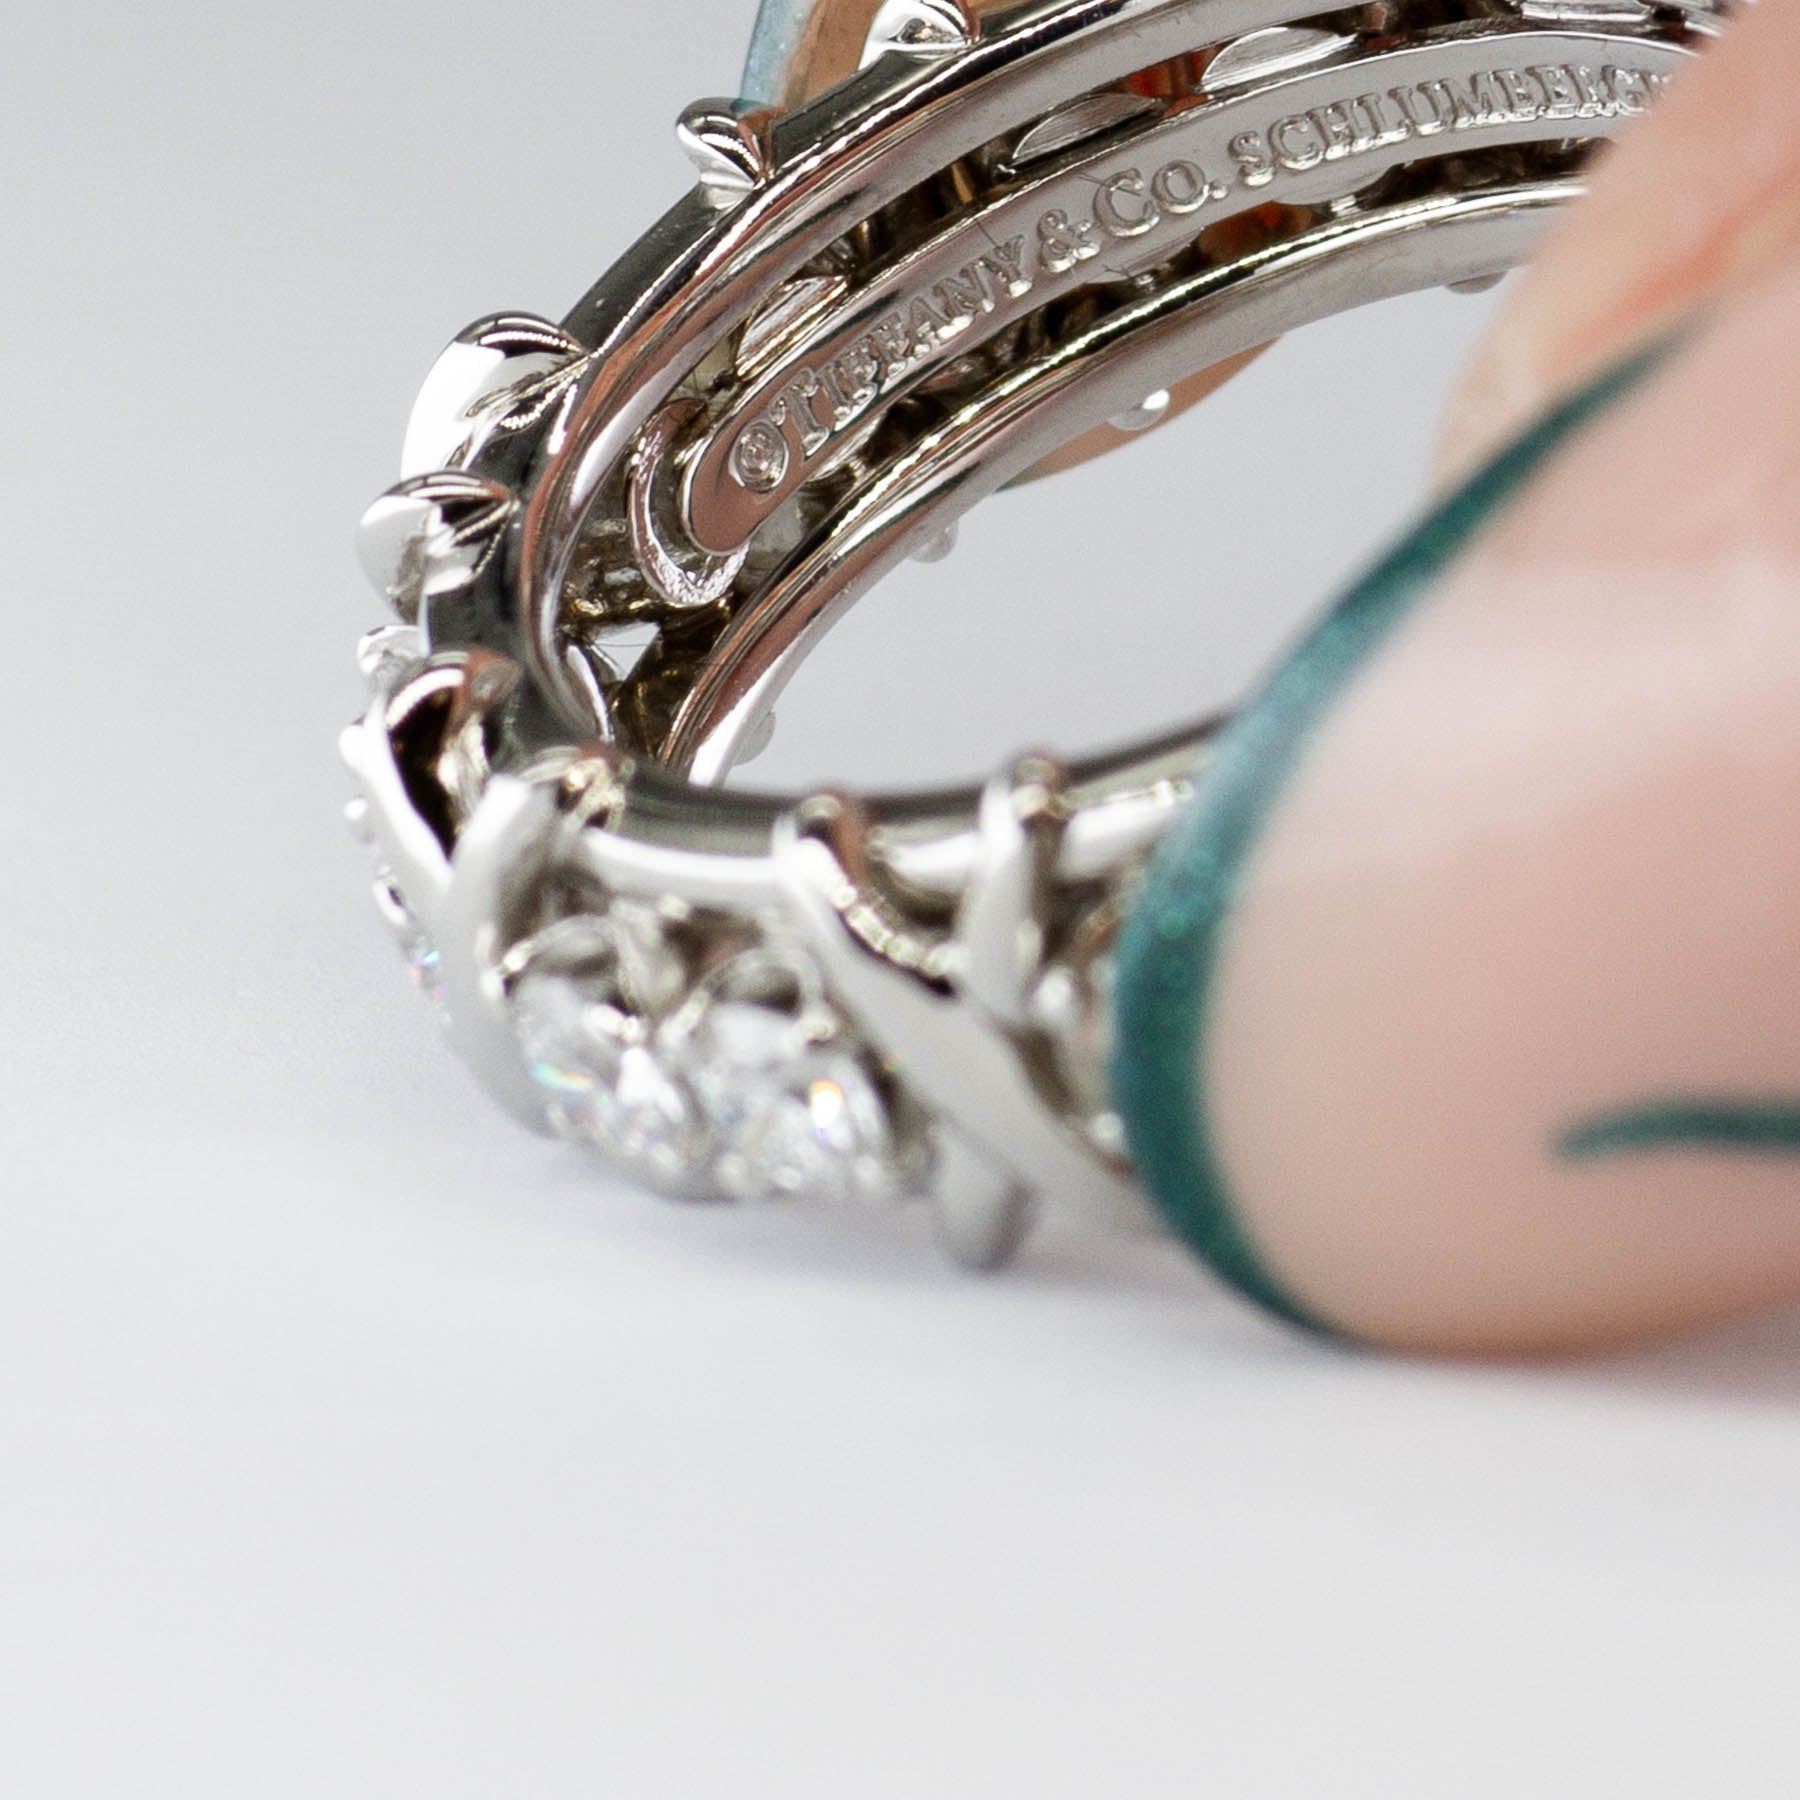 'Tiffany & Co.' Jean Schlumberger 16 Stone Diamond Ring | 1.14ctw | SZ 5.5 - 100 Ways